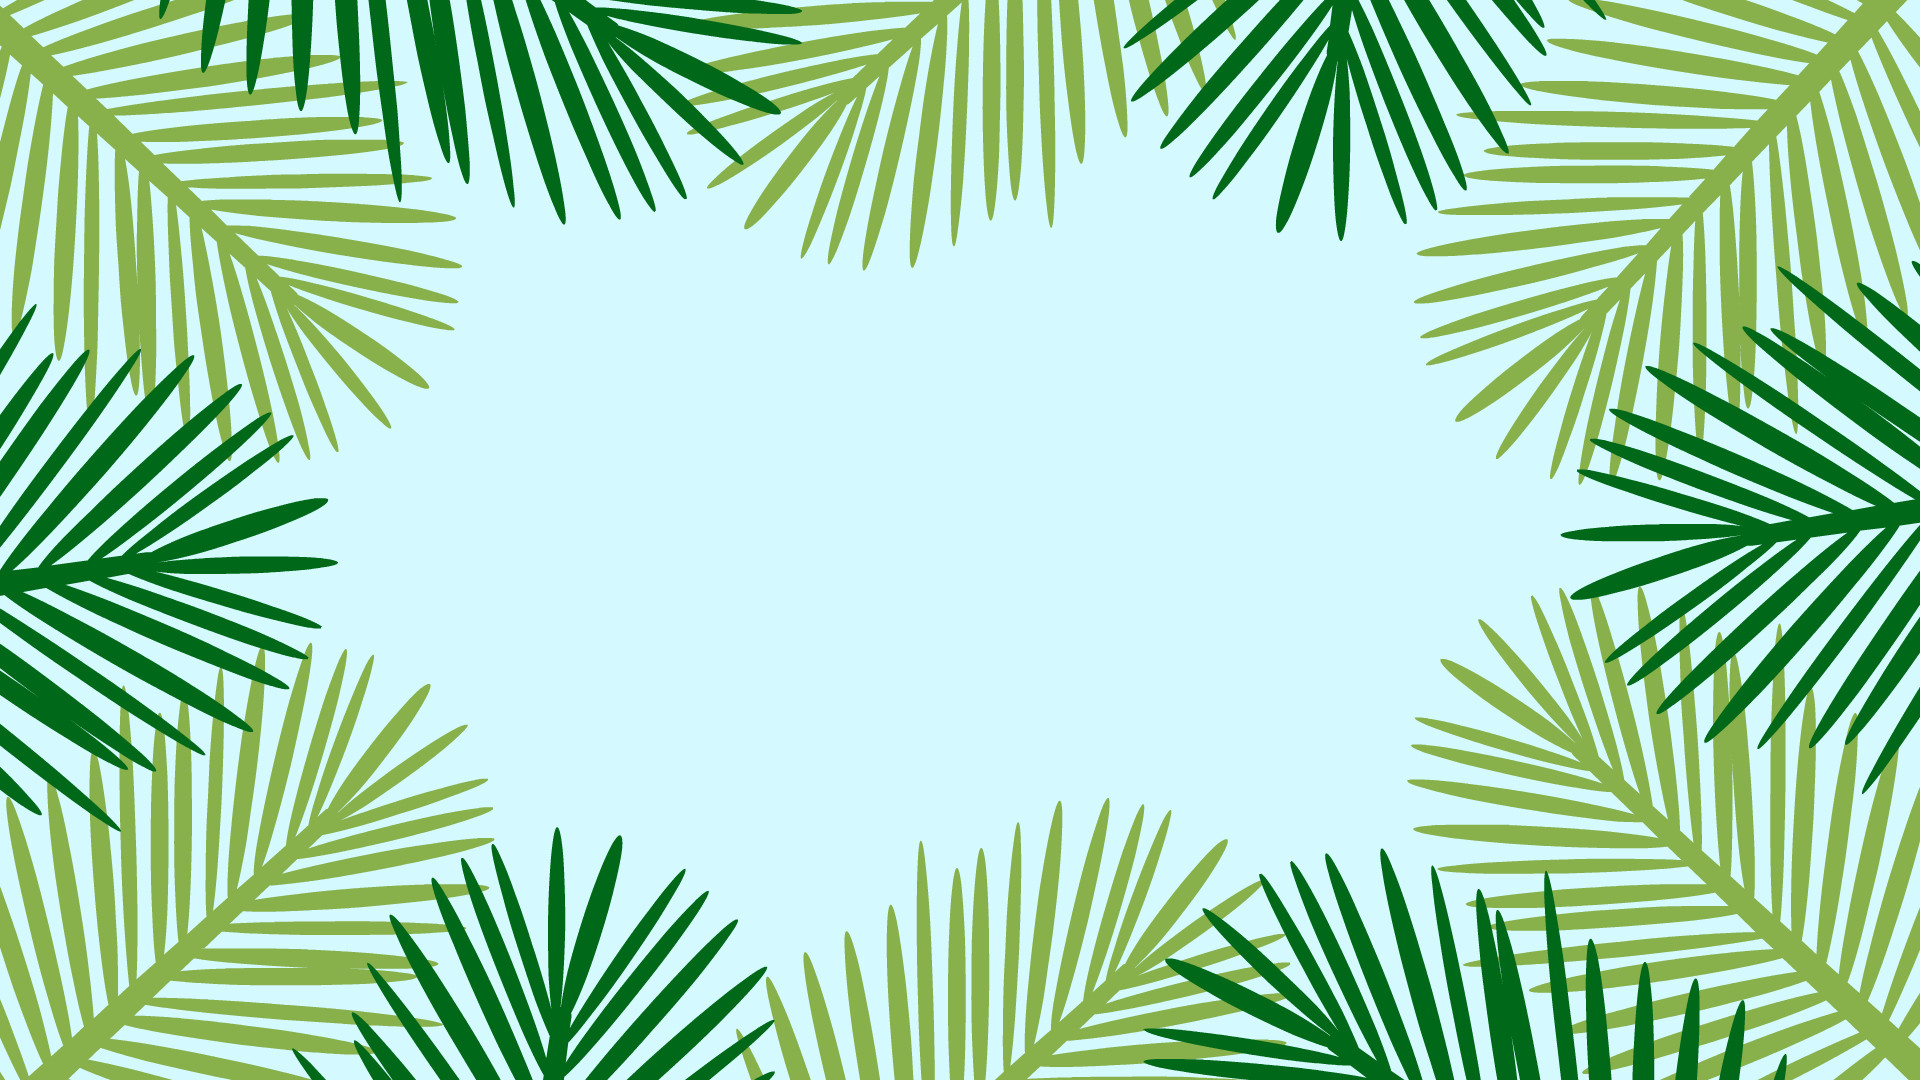 1920x1080 ... Palm Tree Skies Desktop Wallpaper ...